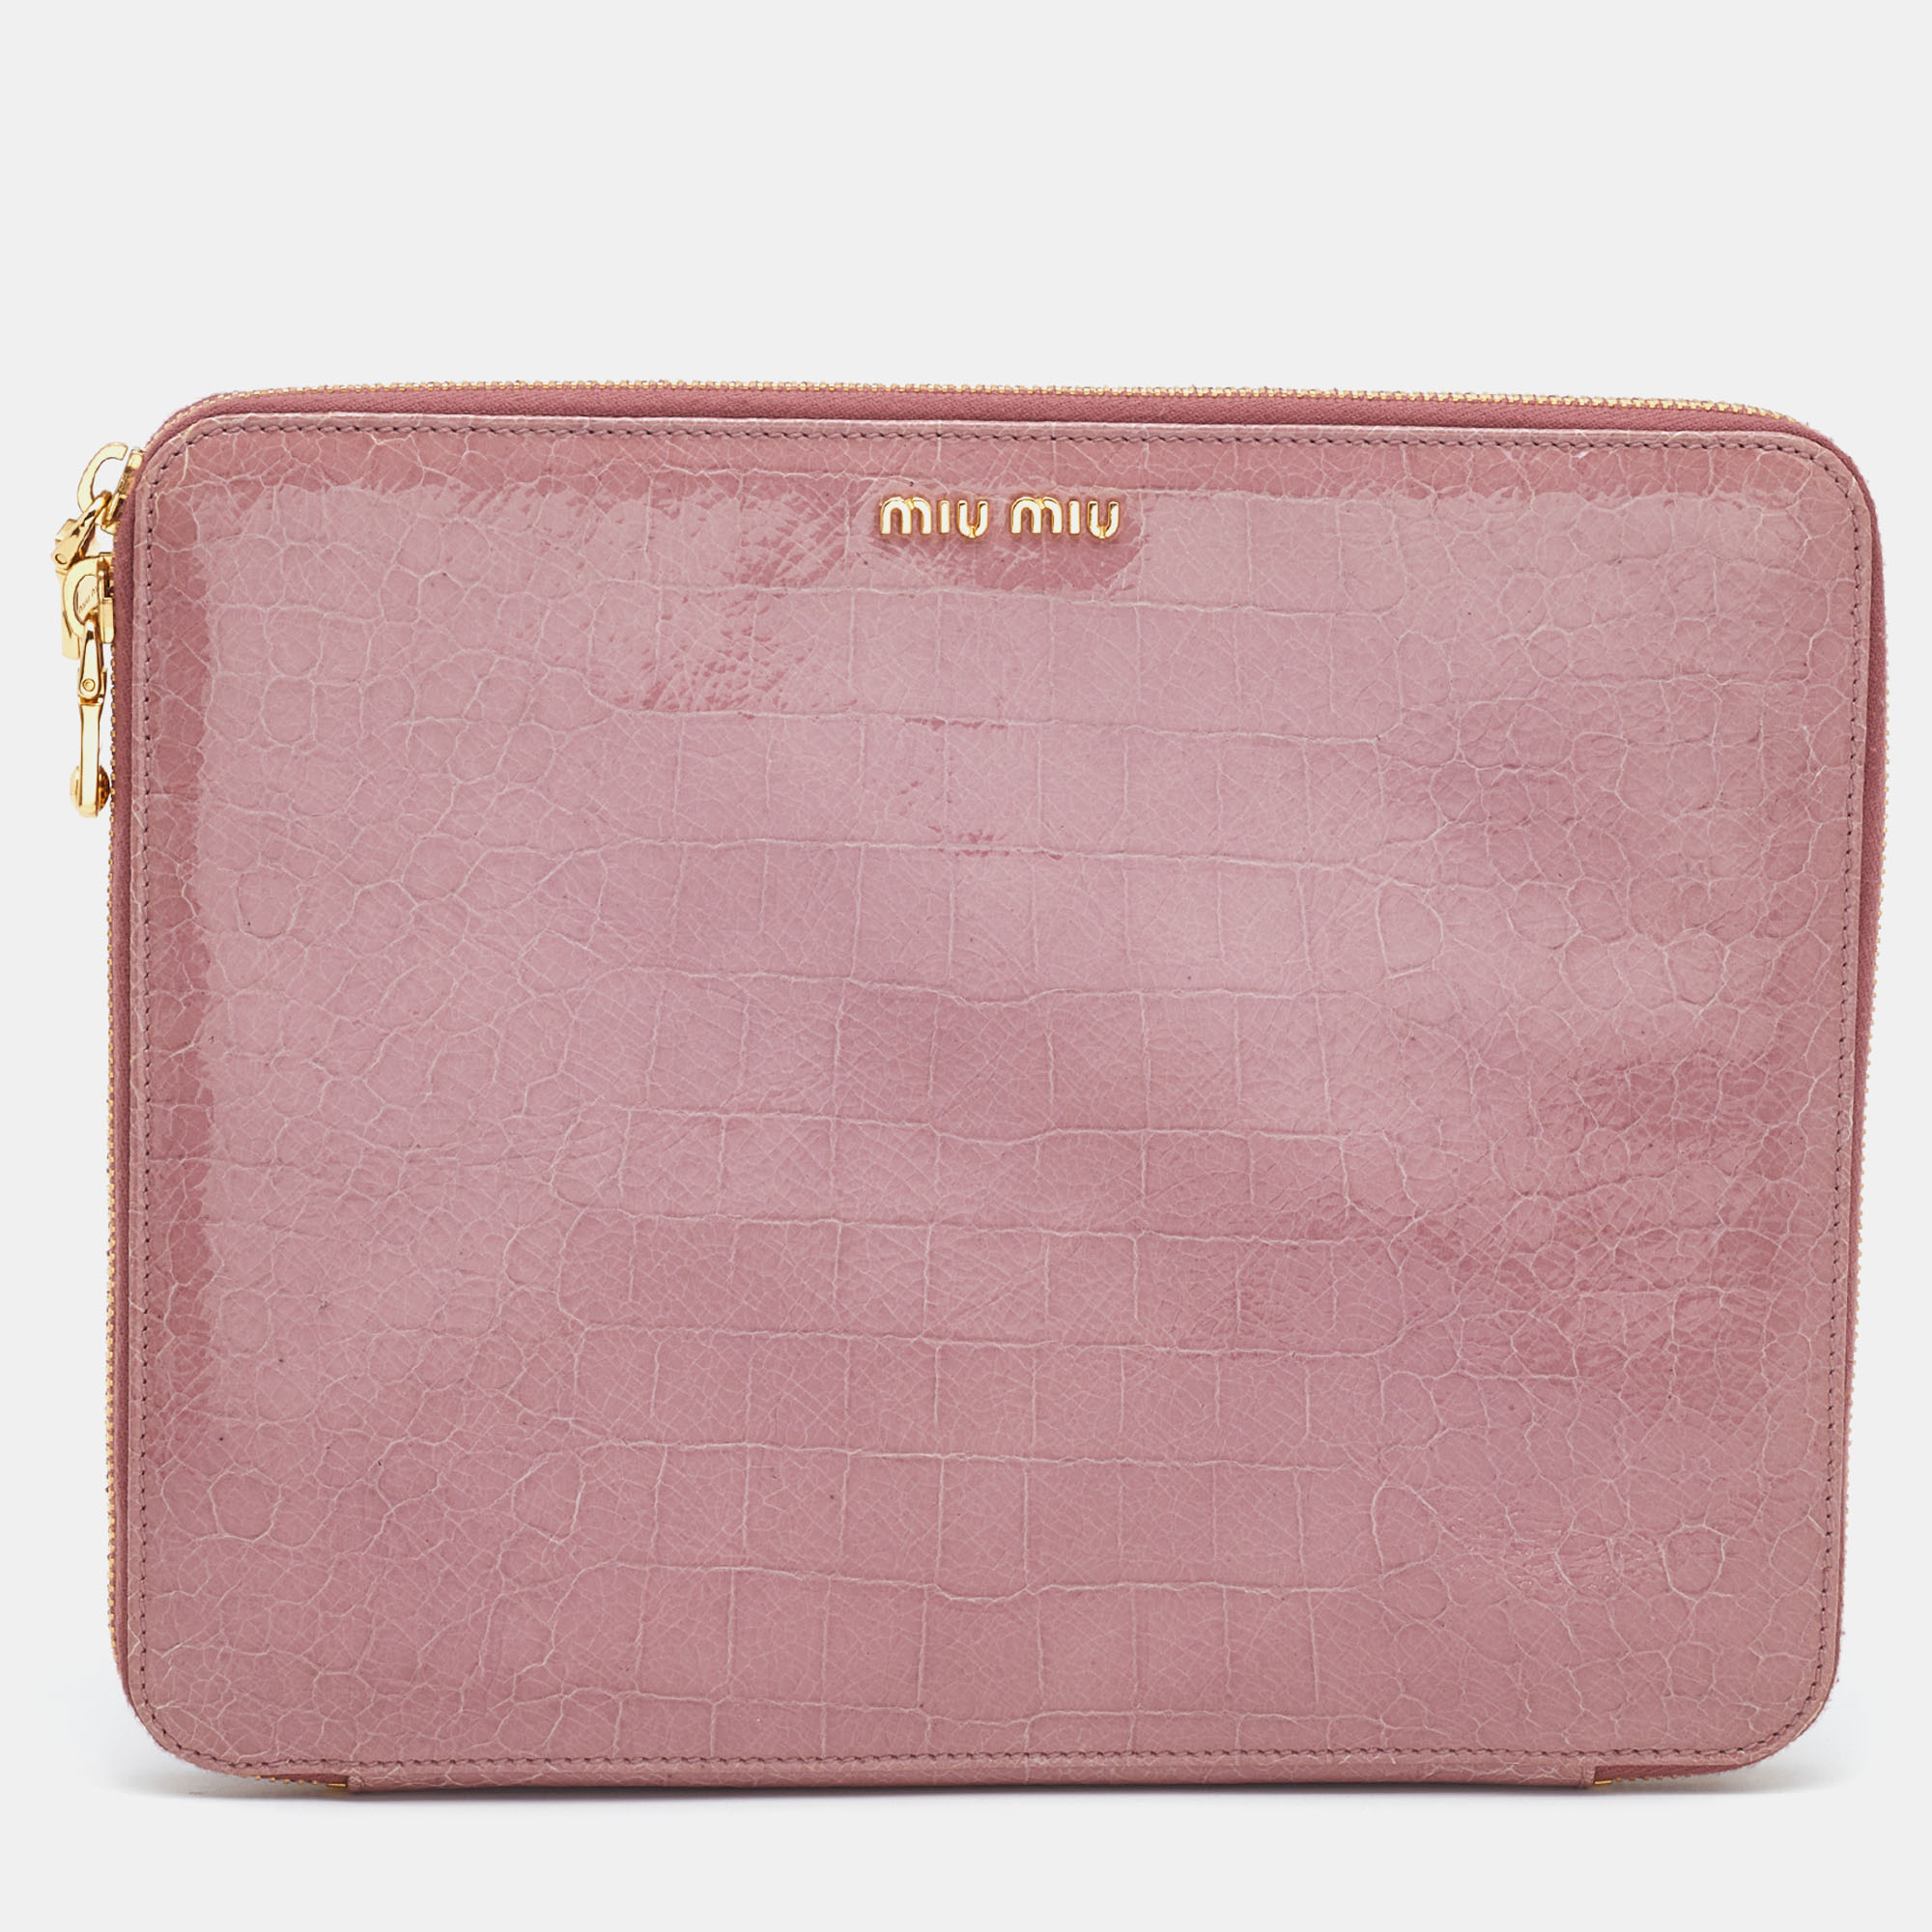 

Miu Miu Pink Croc Embossed Patent Leather Zip Around iPad Cover